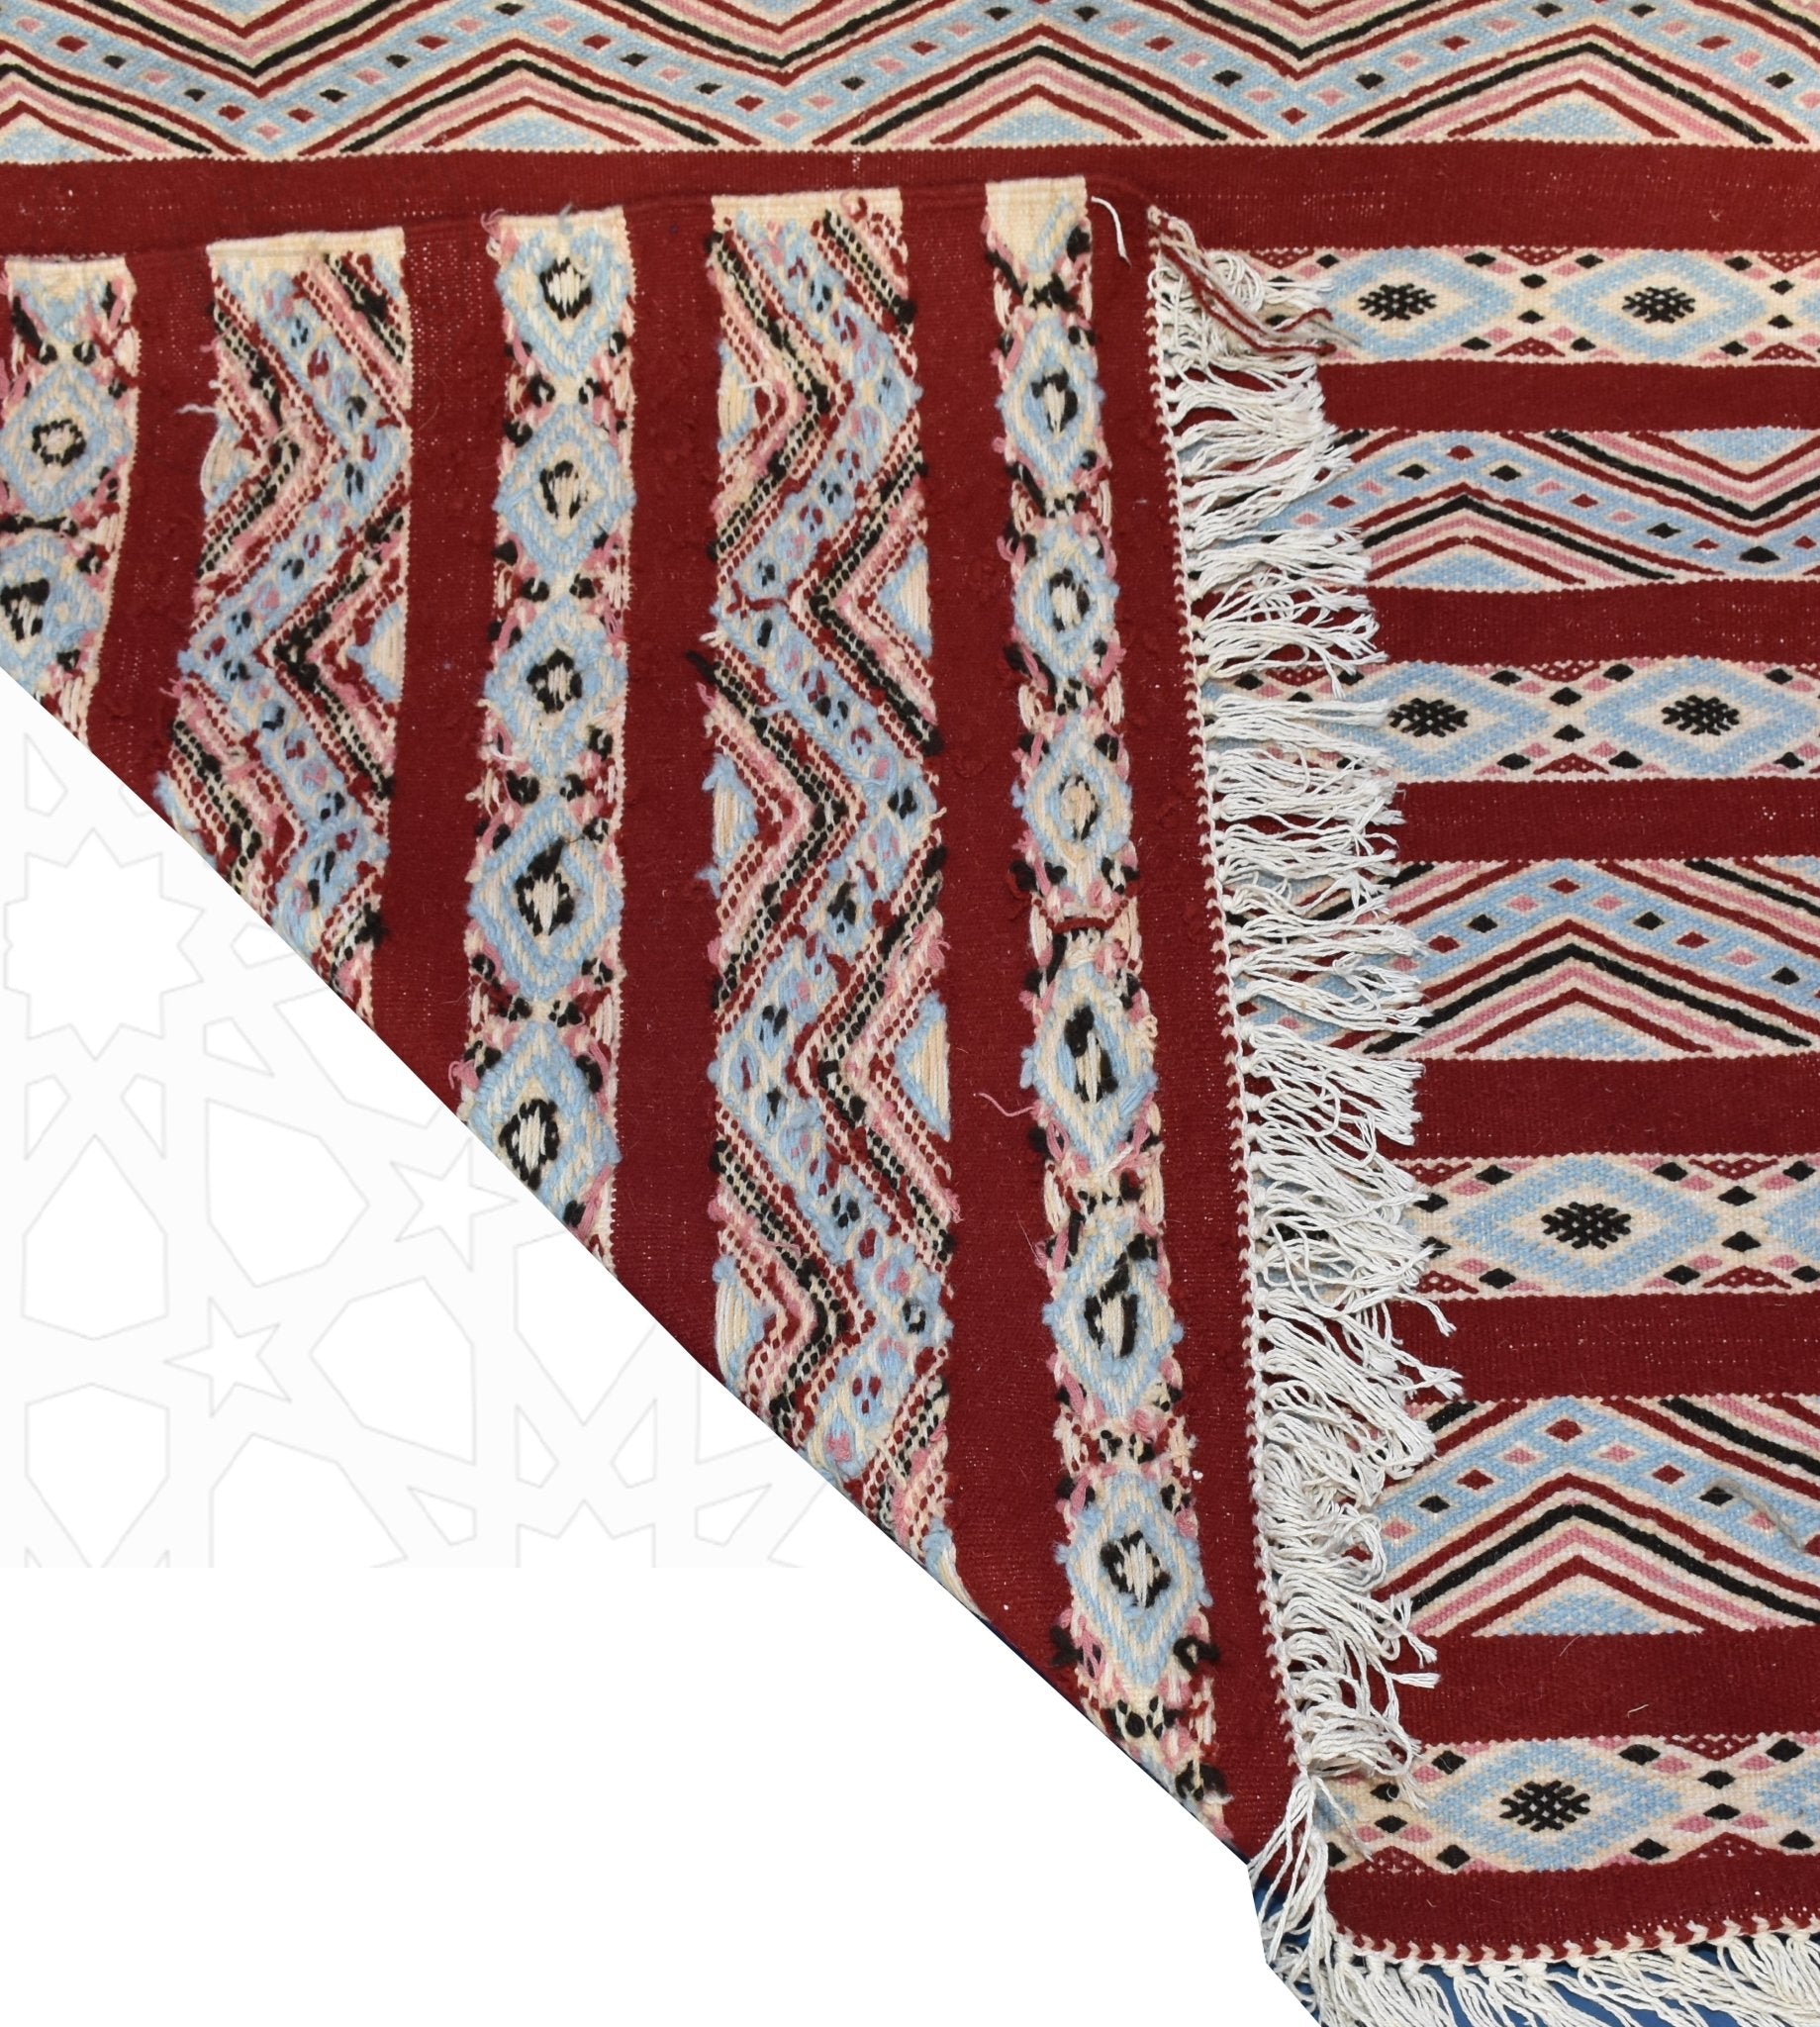 Flatweave kilim hanbal Moroccan rug - 4.43 x 7.06 ft / 135 x 215 cm - Berbers Market